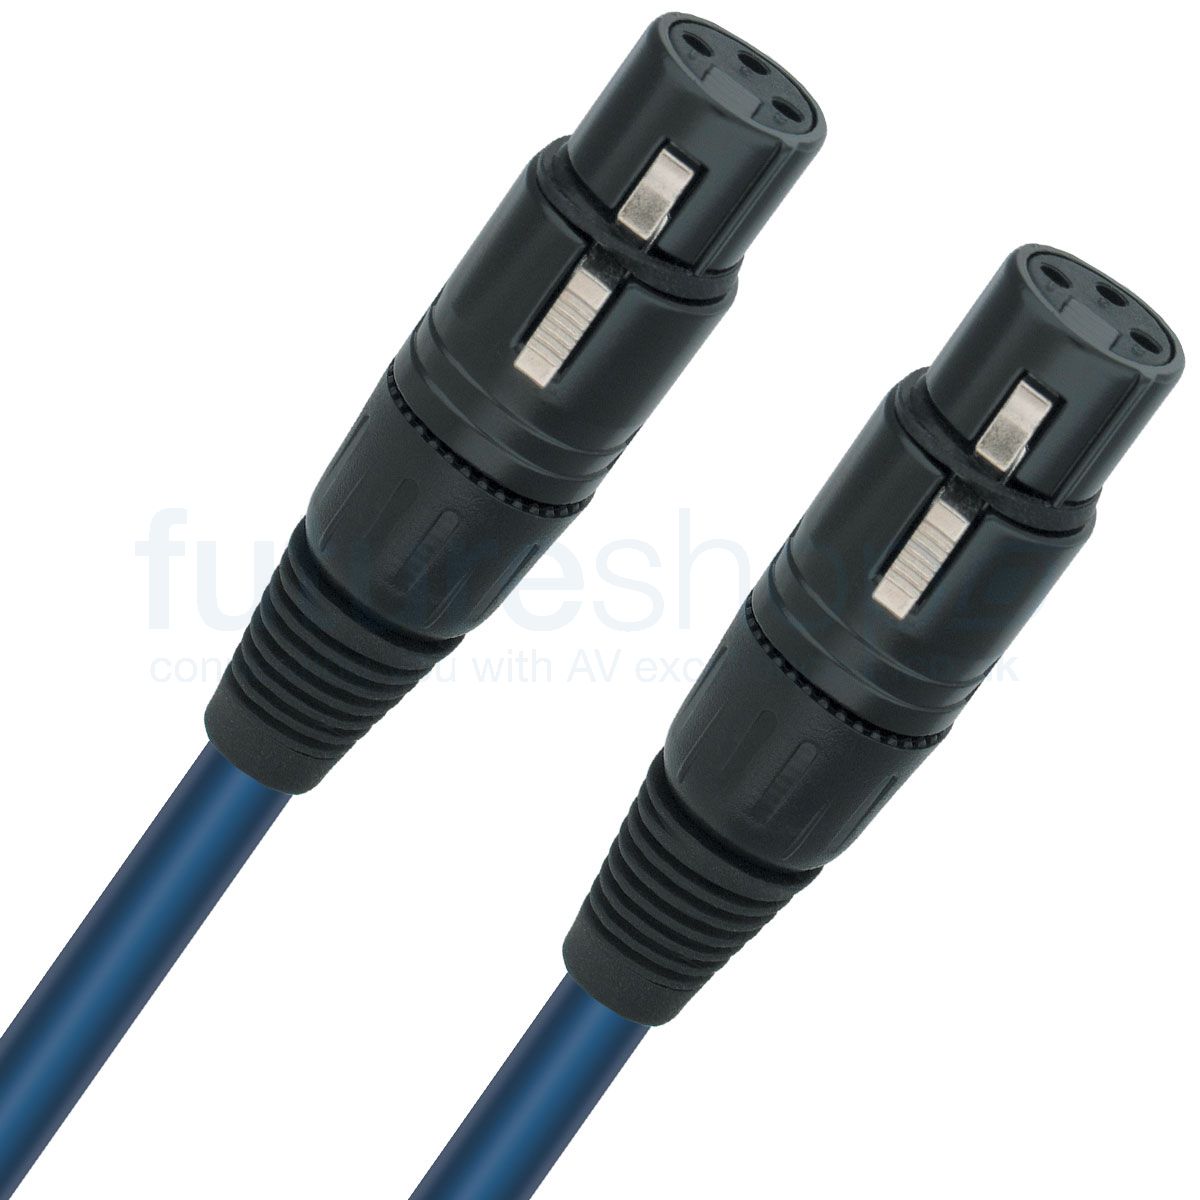 Wireworld Oasis 8 2 XLR to 2 XLR Audio Cable Pair